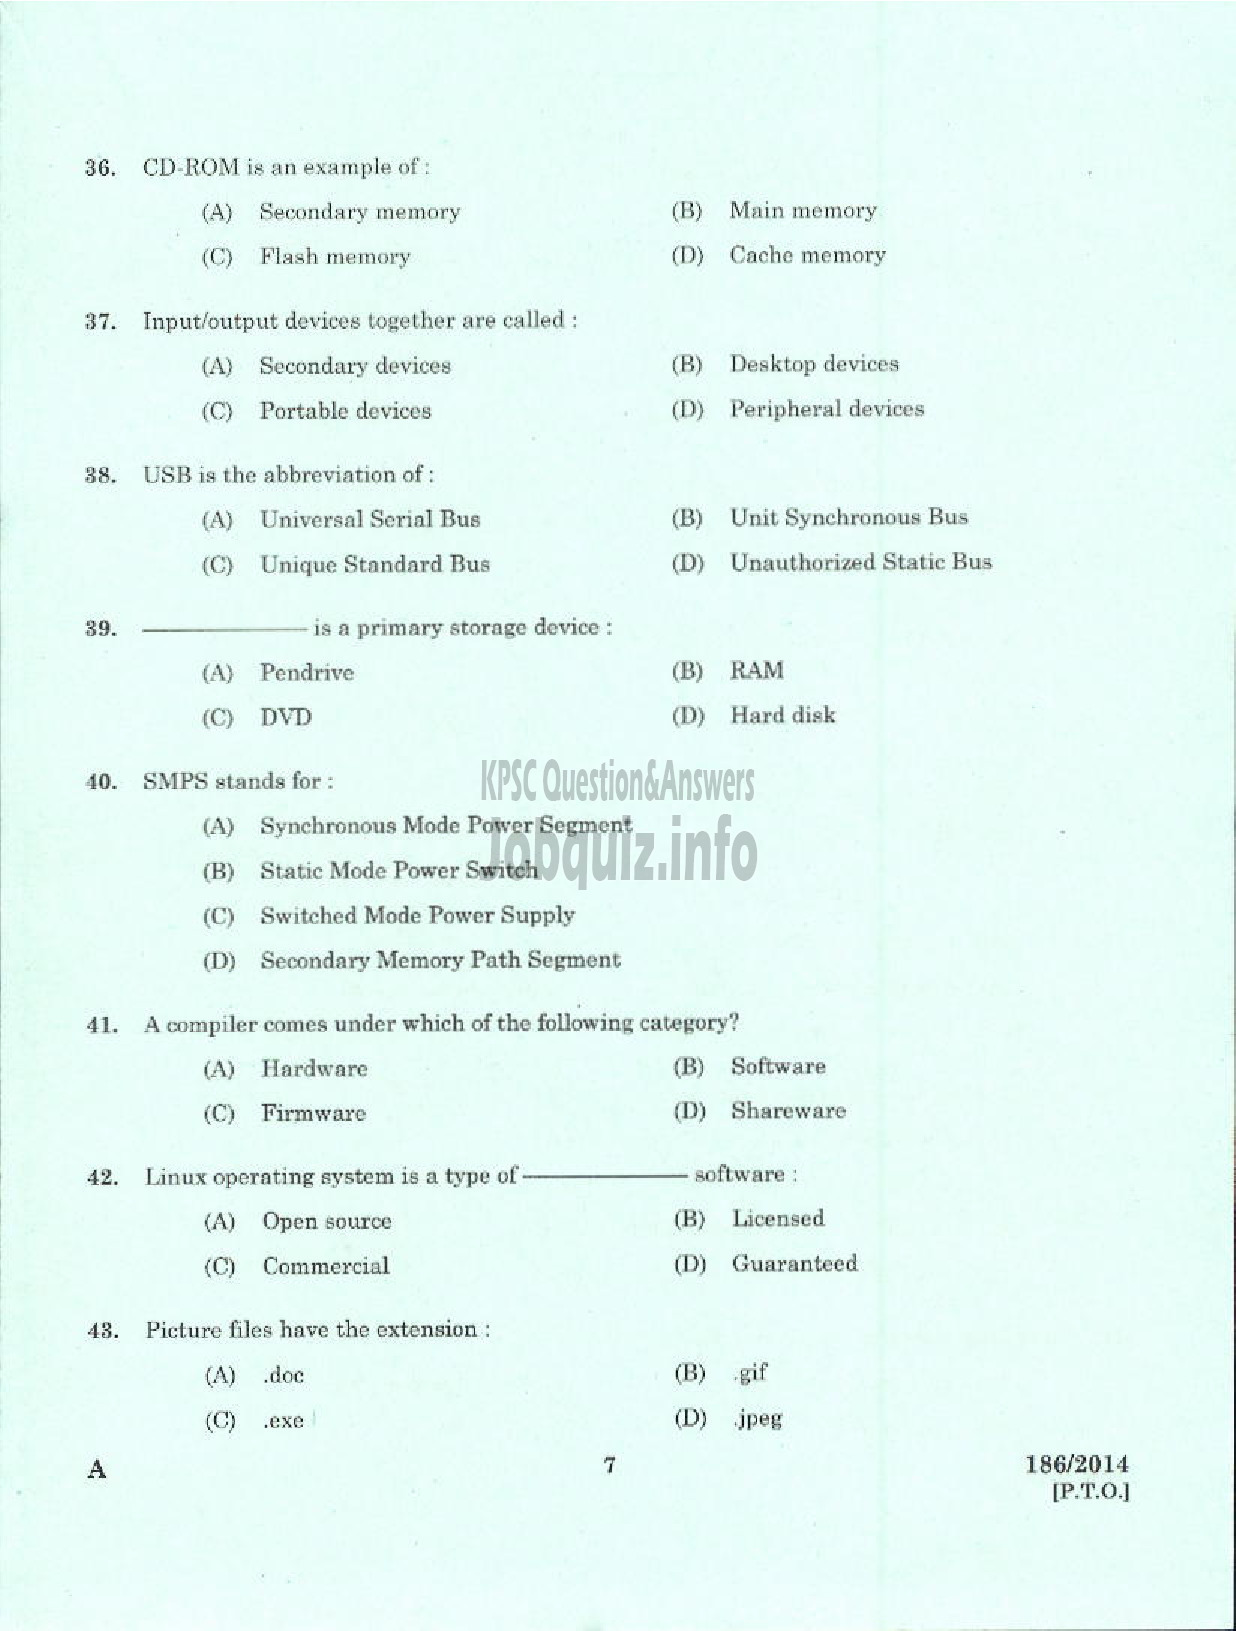 Kerala PSC Question Paper - TRADESMAN INFORMATION TECHNOLOGY TECHNICAL EDUCATION PALAKKAD-5